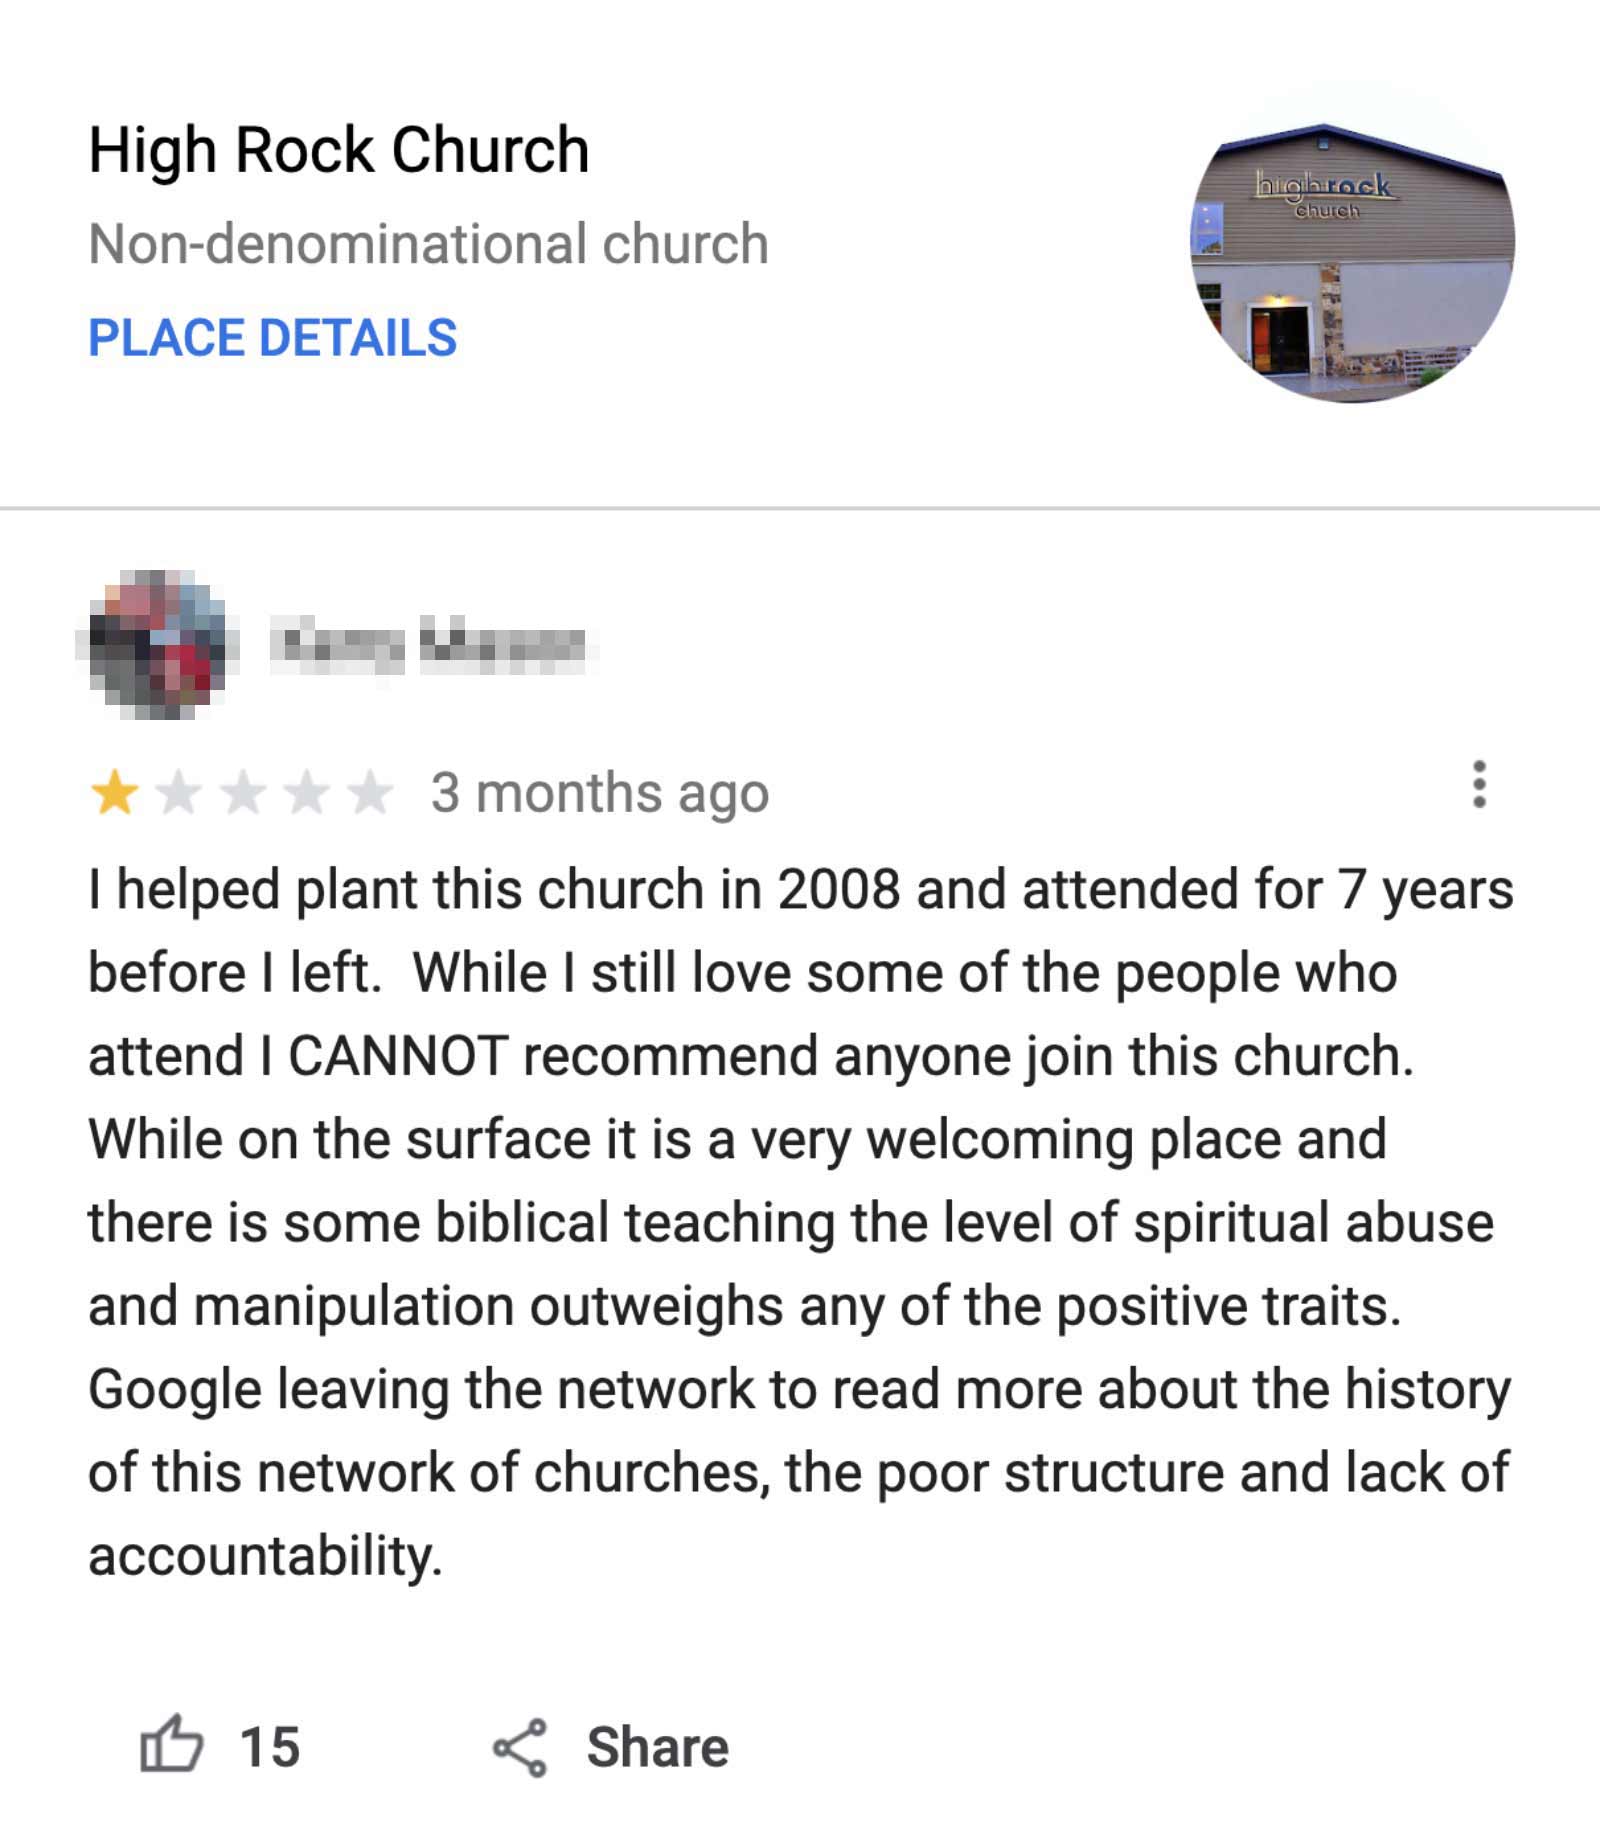 High Rock Church - Online Reviews from Social Media